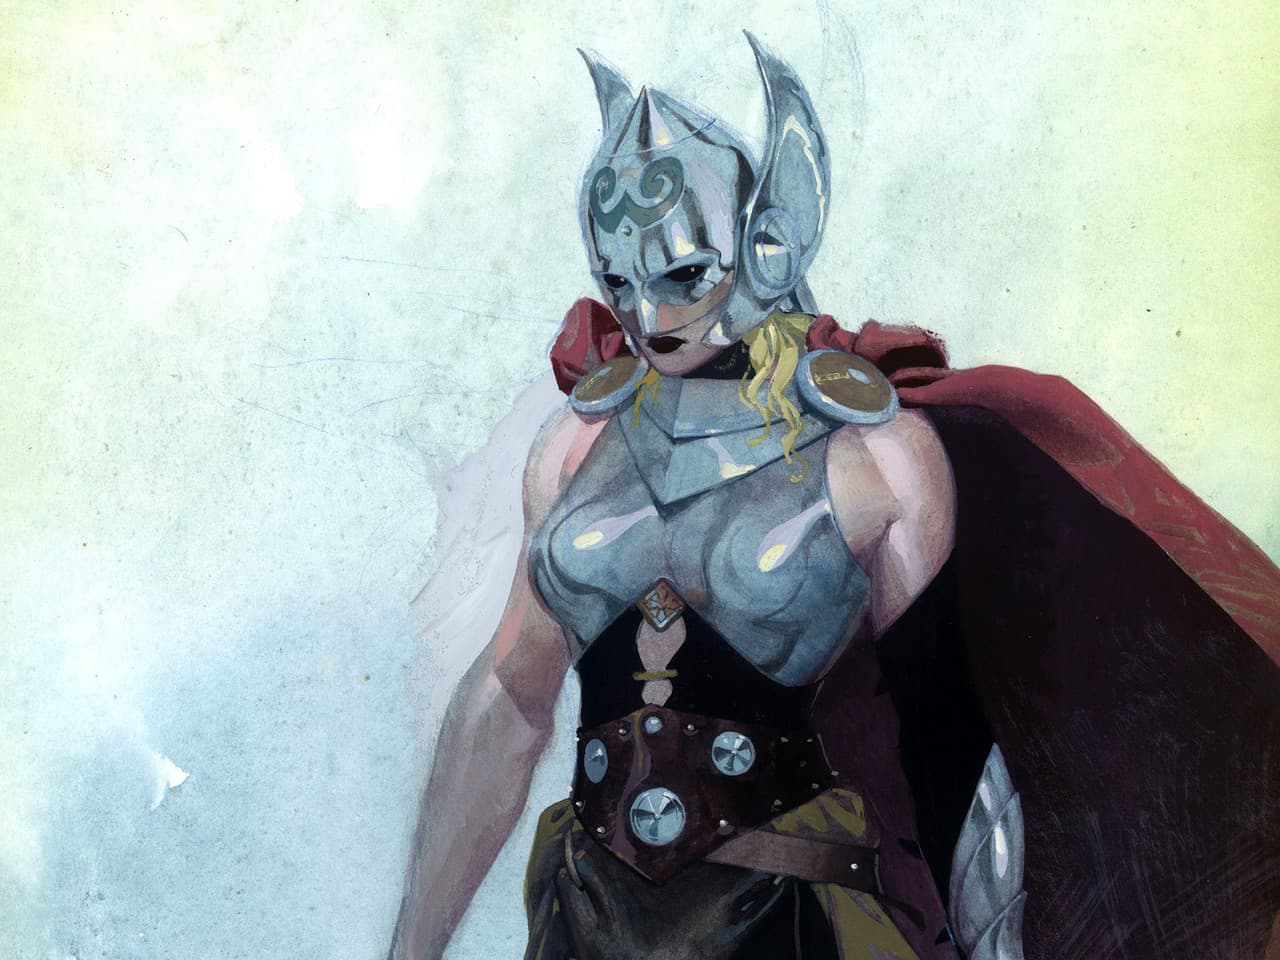 Thor as a woman